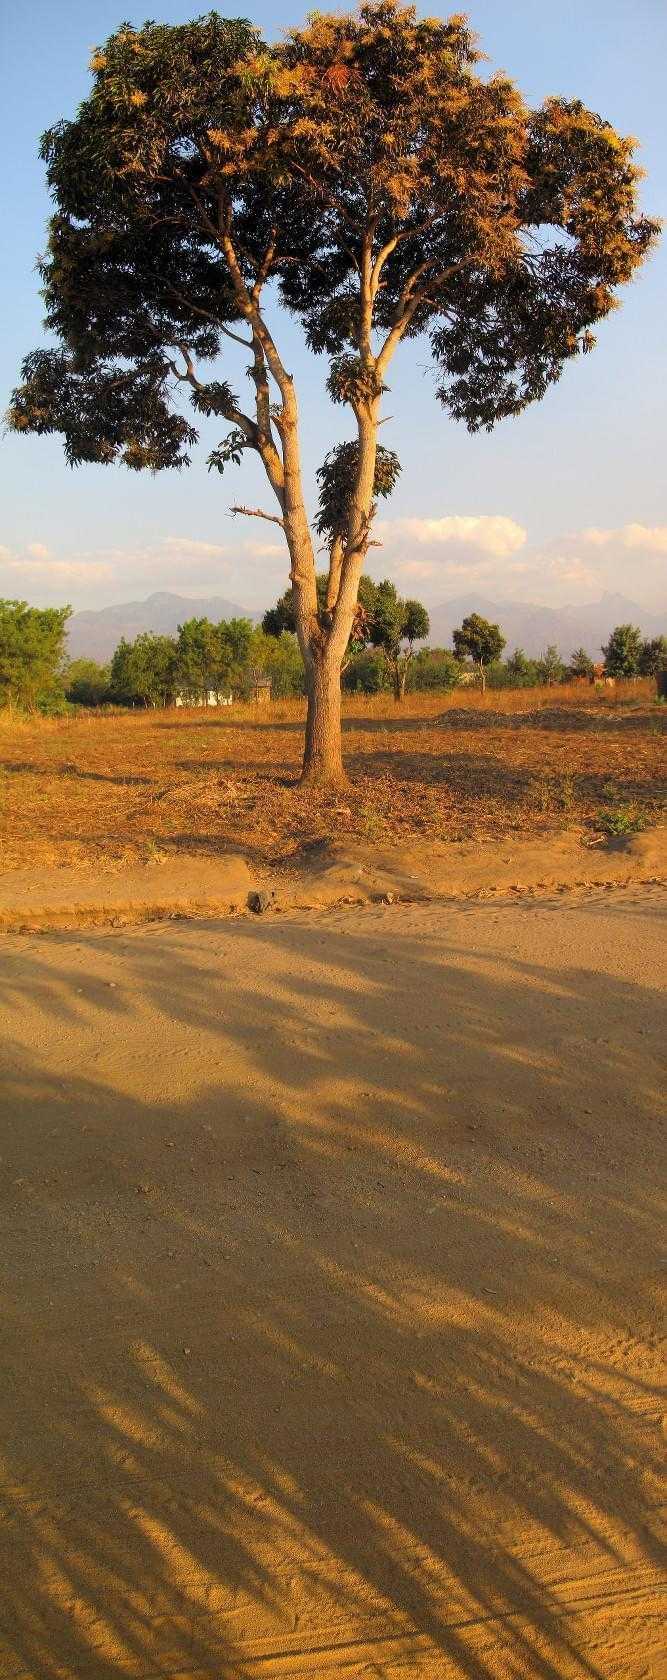 Just a tree in Tanzania